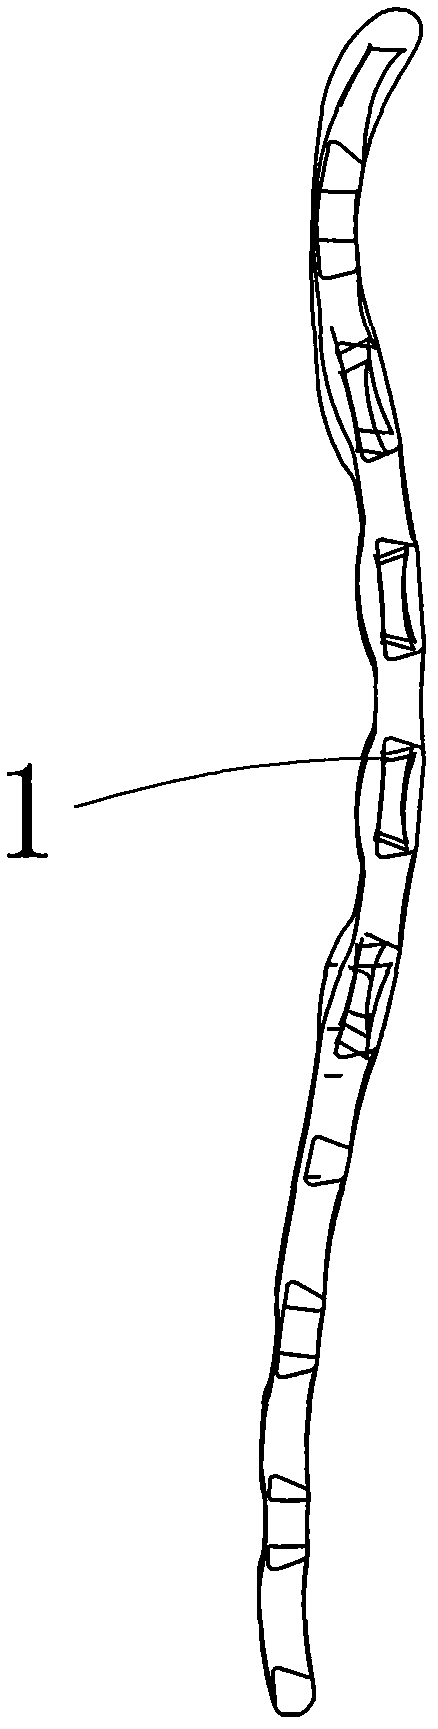 Semi-self-locking acetabulum posterior wall and posterior column anatomical plate